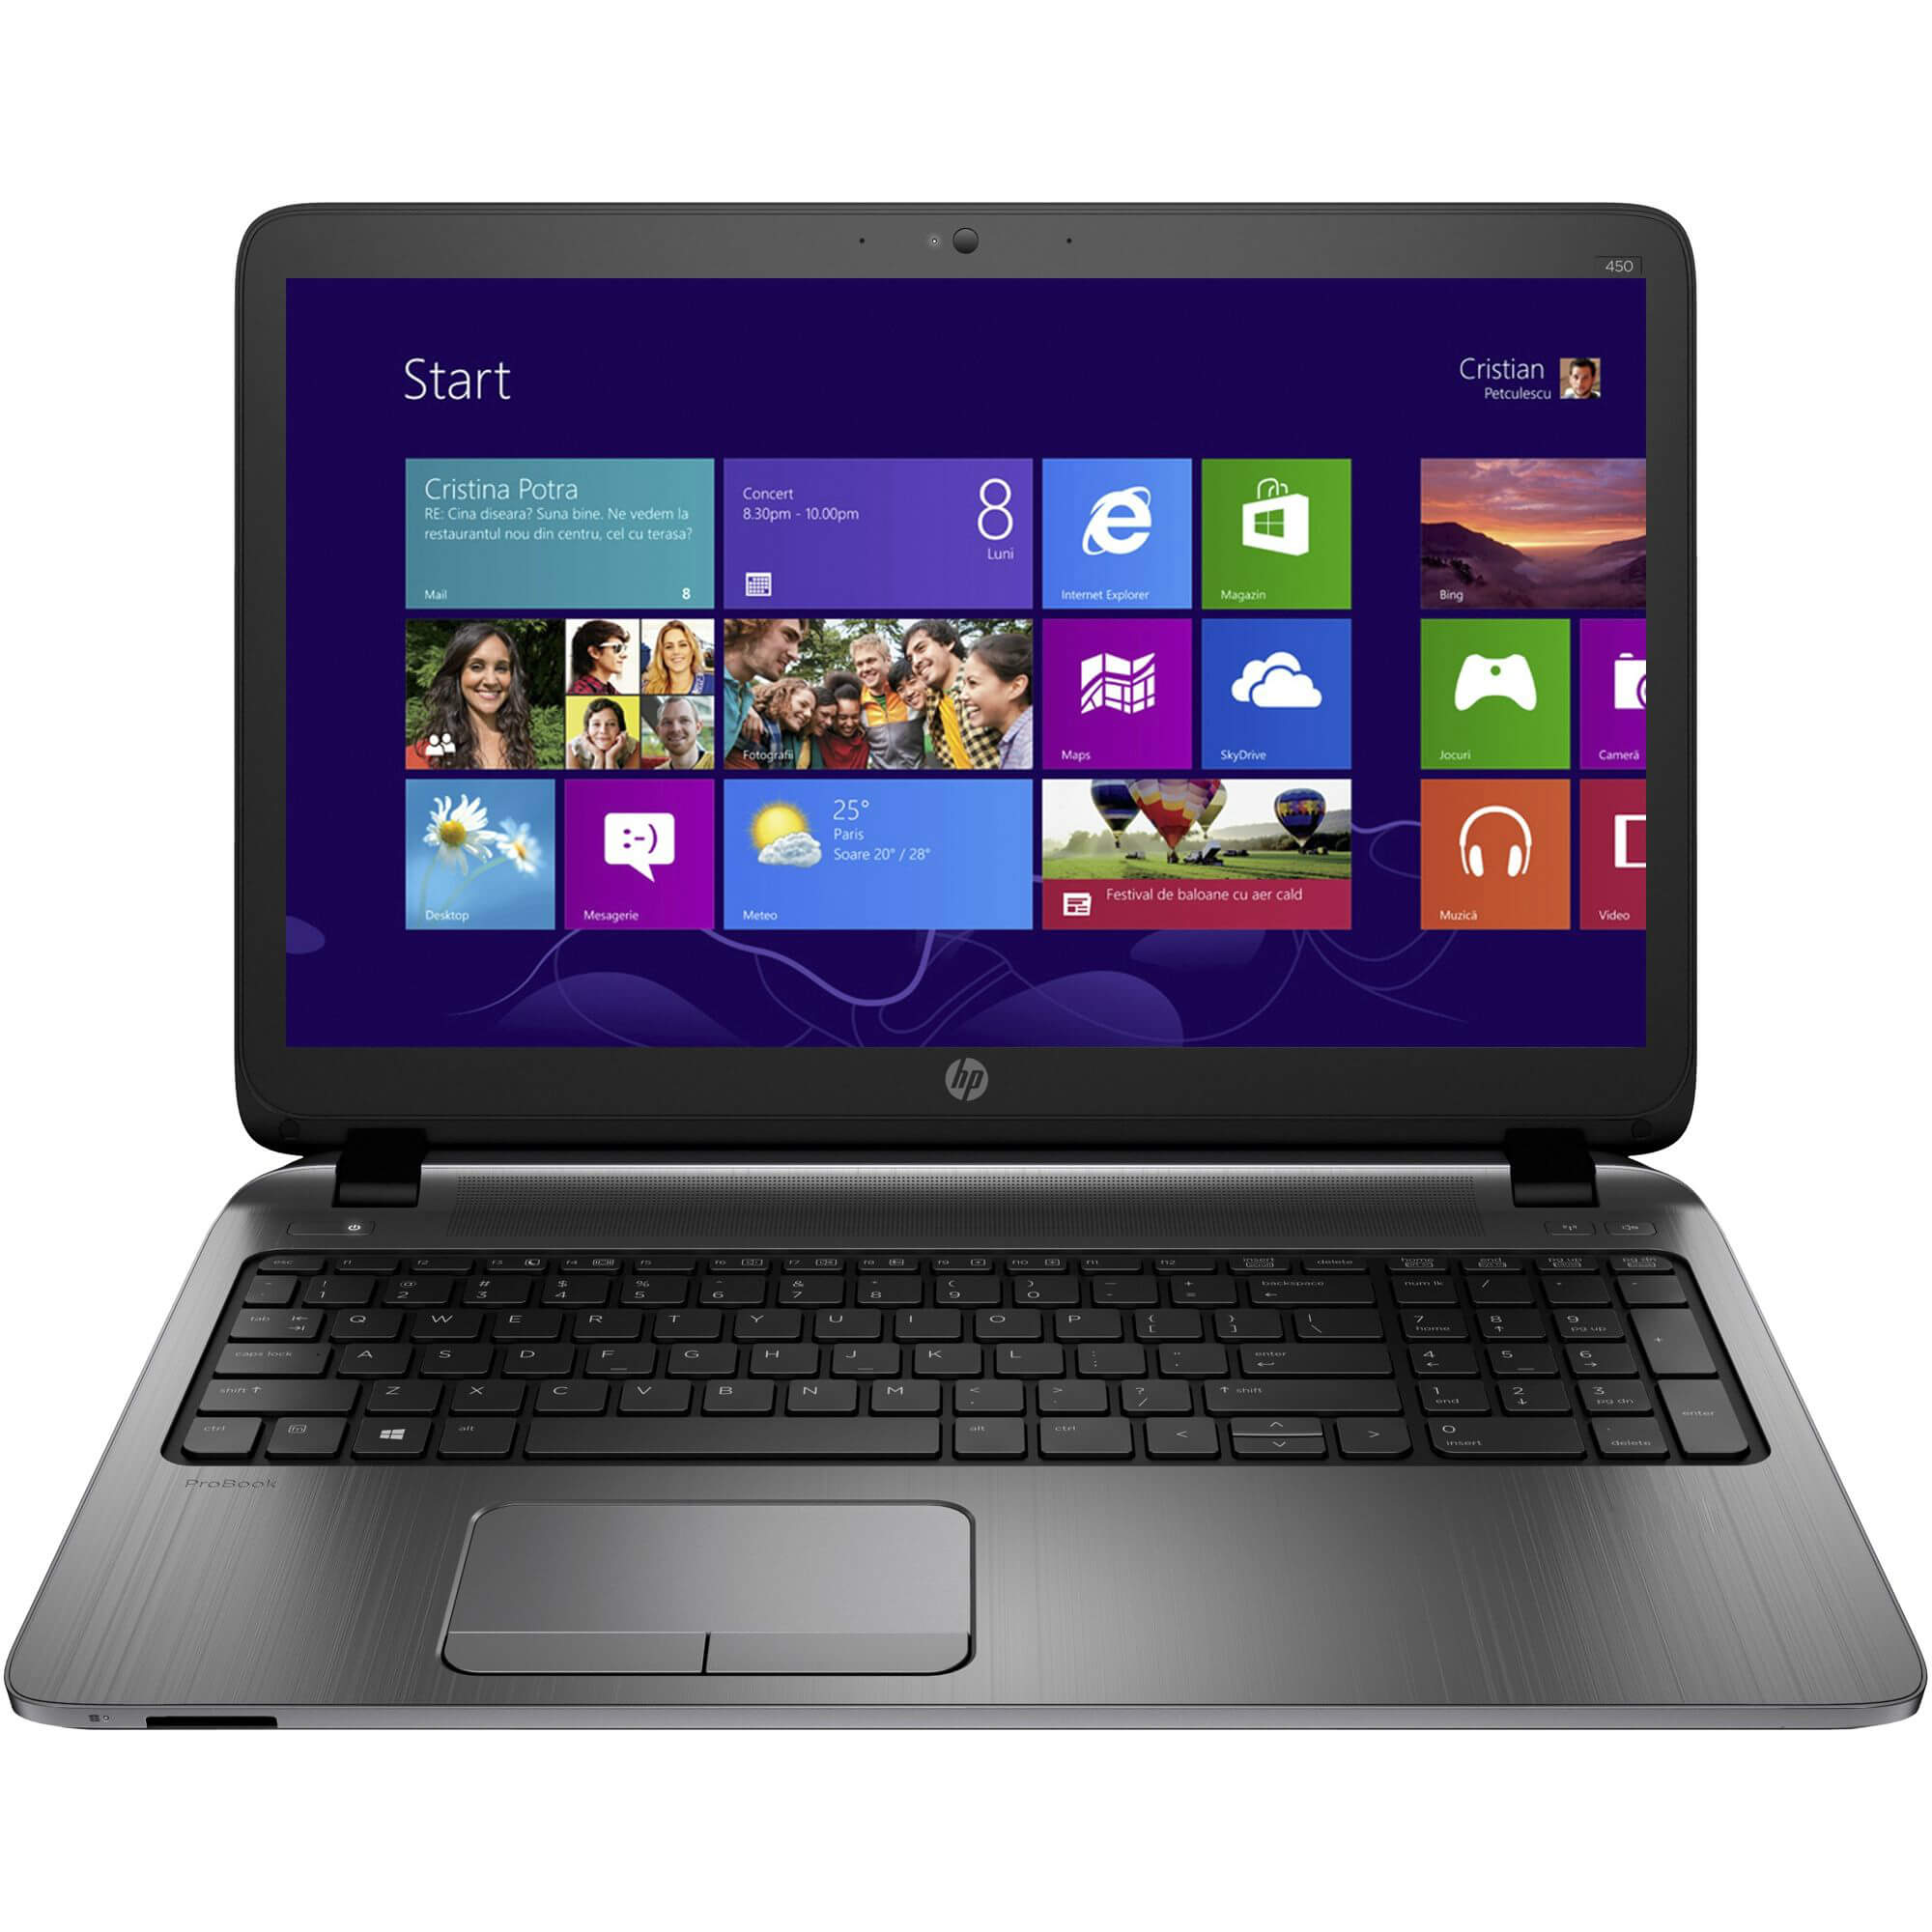  Laptop HP ProBook 450 G2, Intel Core i5-5200U, 4GB DDR3, HDD 750GB, AMD Radeon R5 M255 2GB, Windows 8.1 